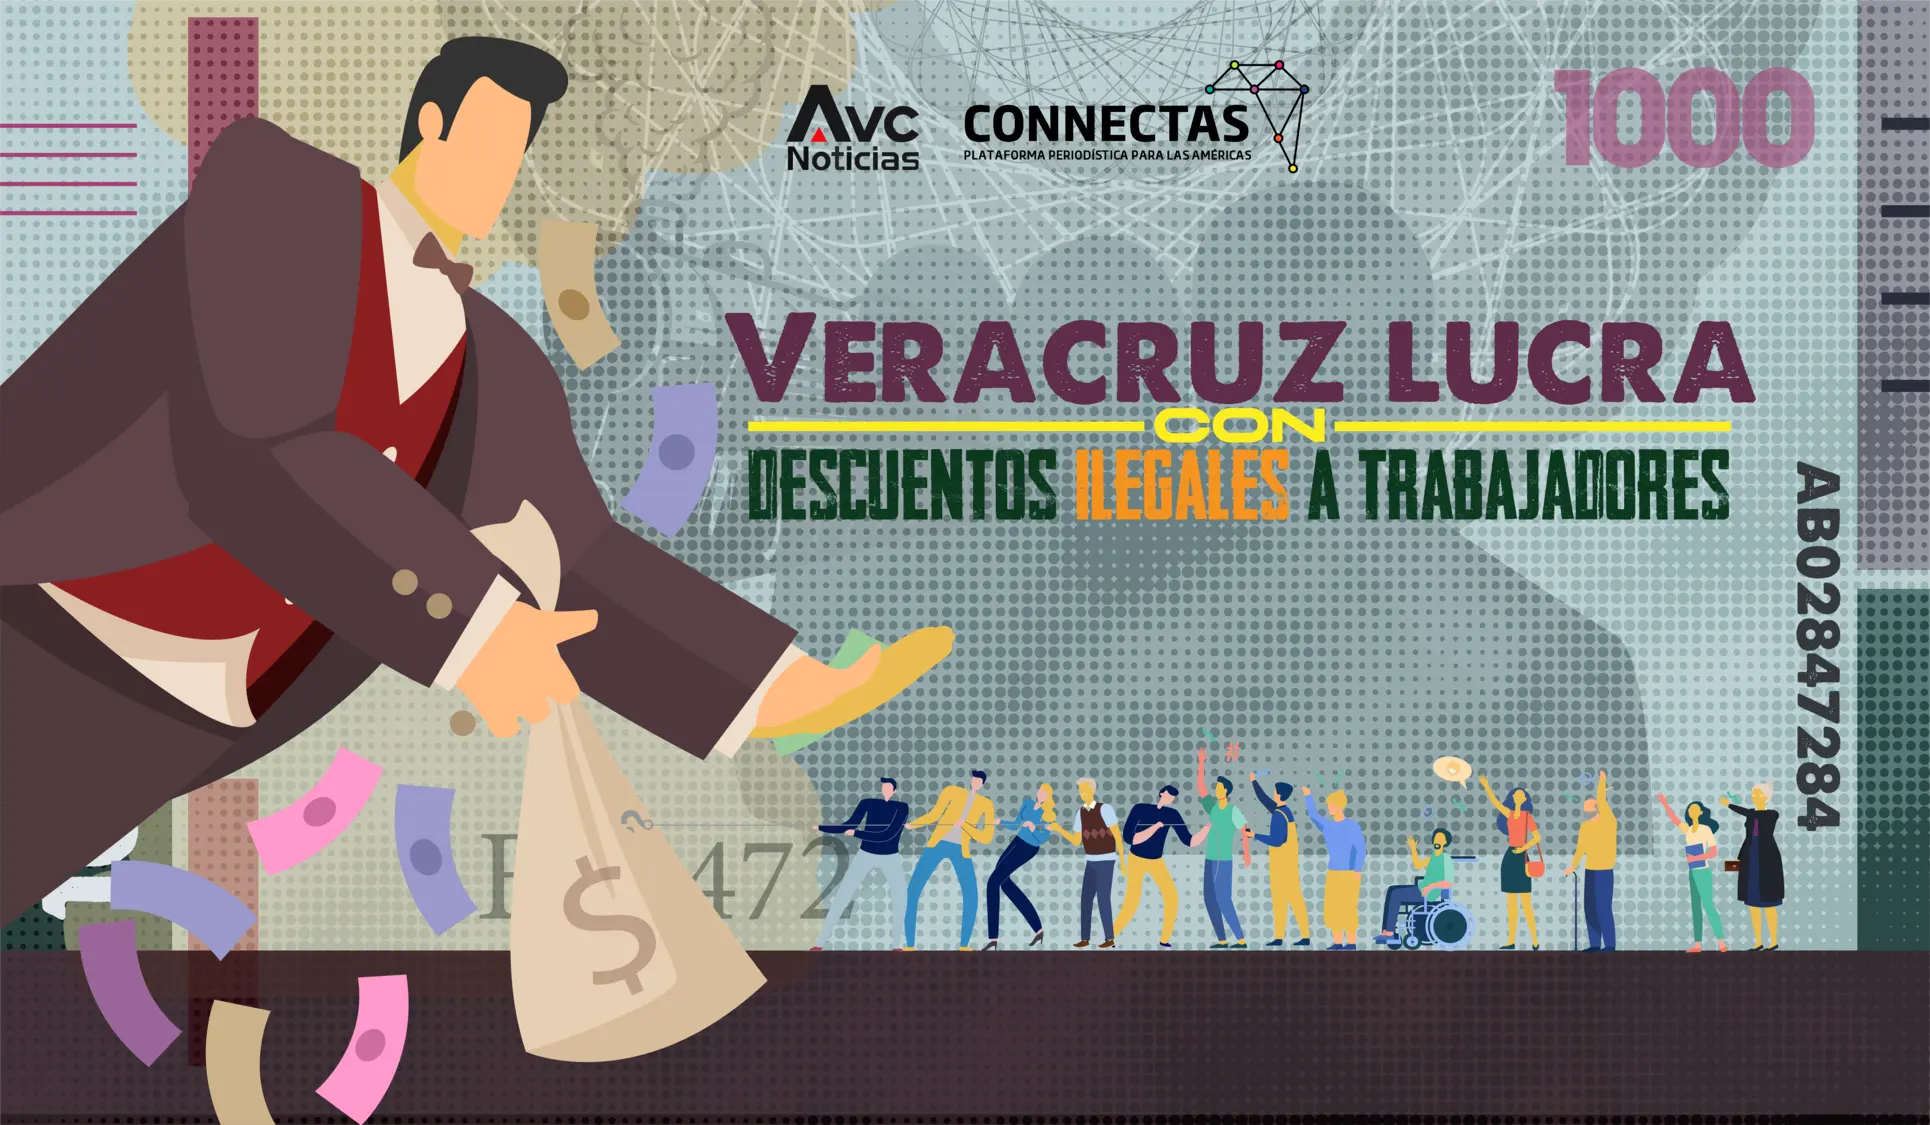 Veracruz lucra con descuentos ilegales a trabajadores | AVCNOTICIAS